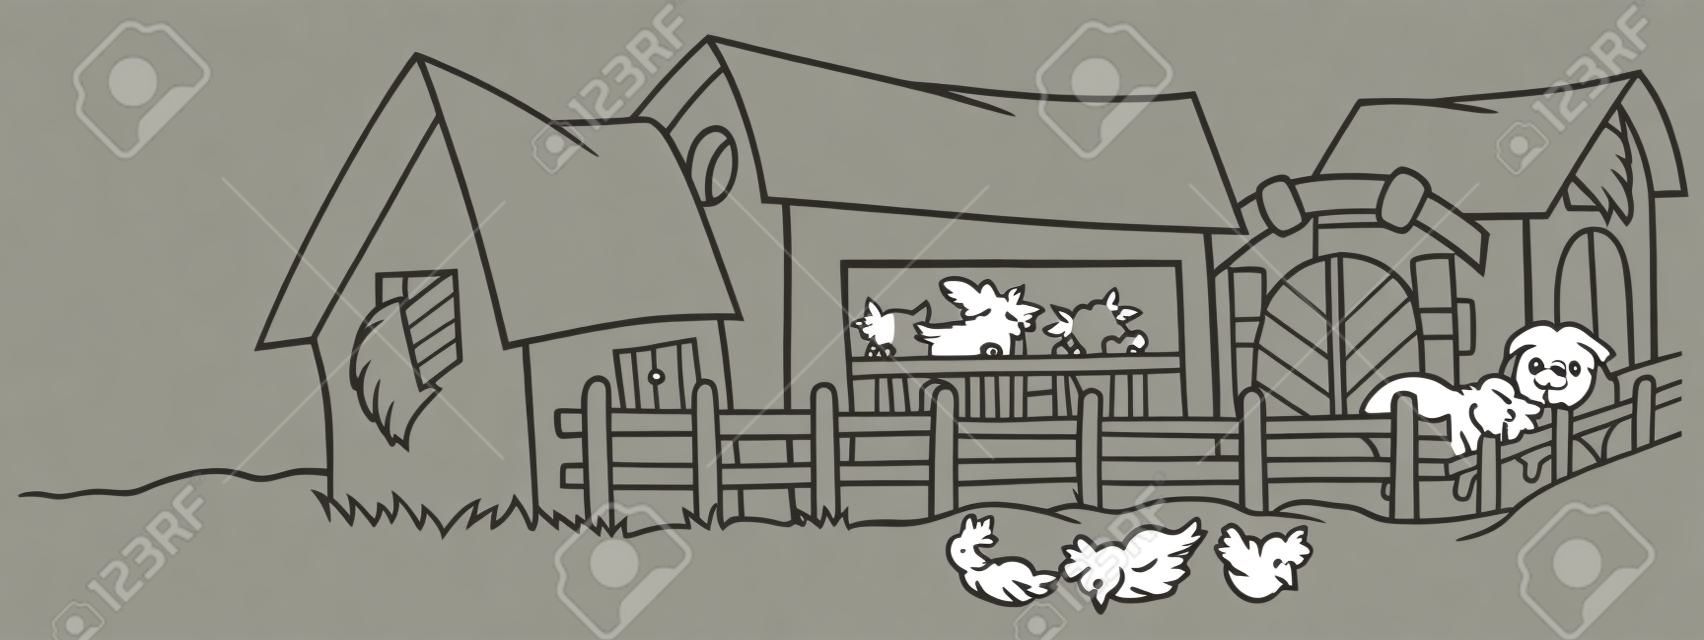 Farm - Black and White Cartoon illustration, Vector